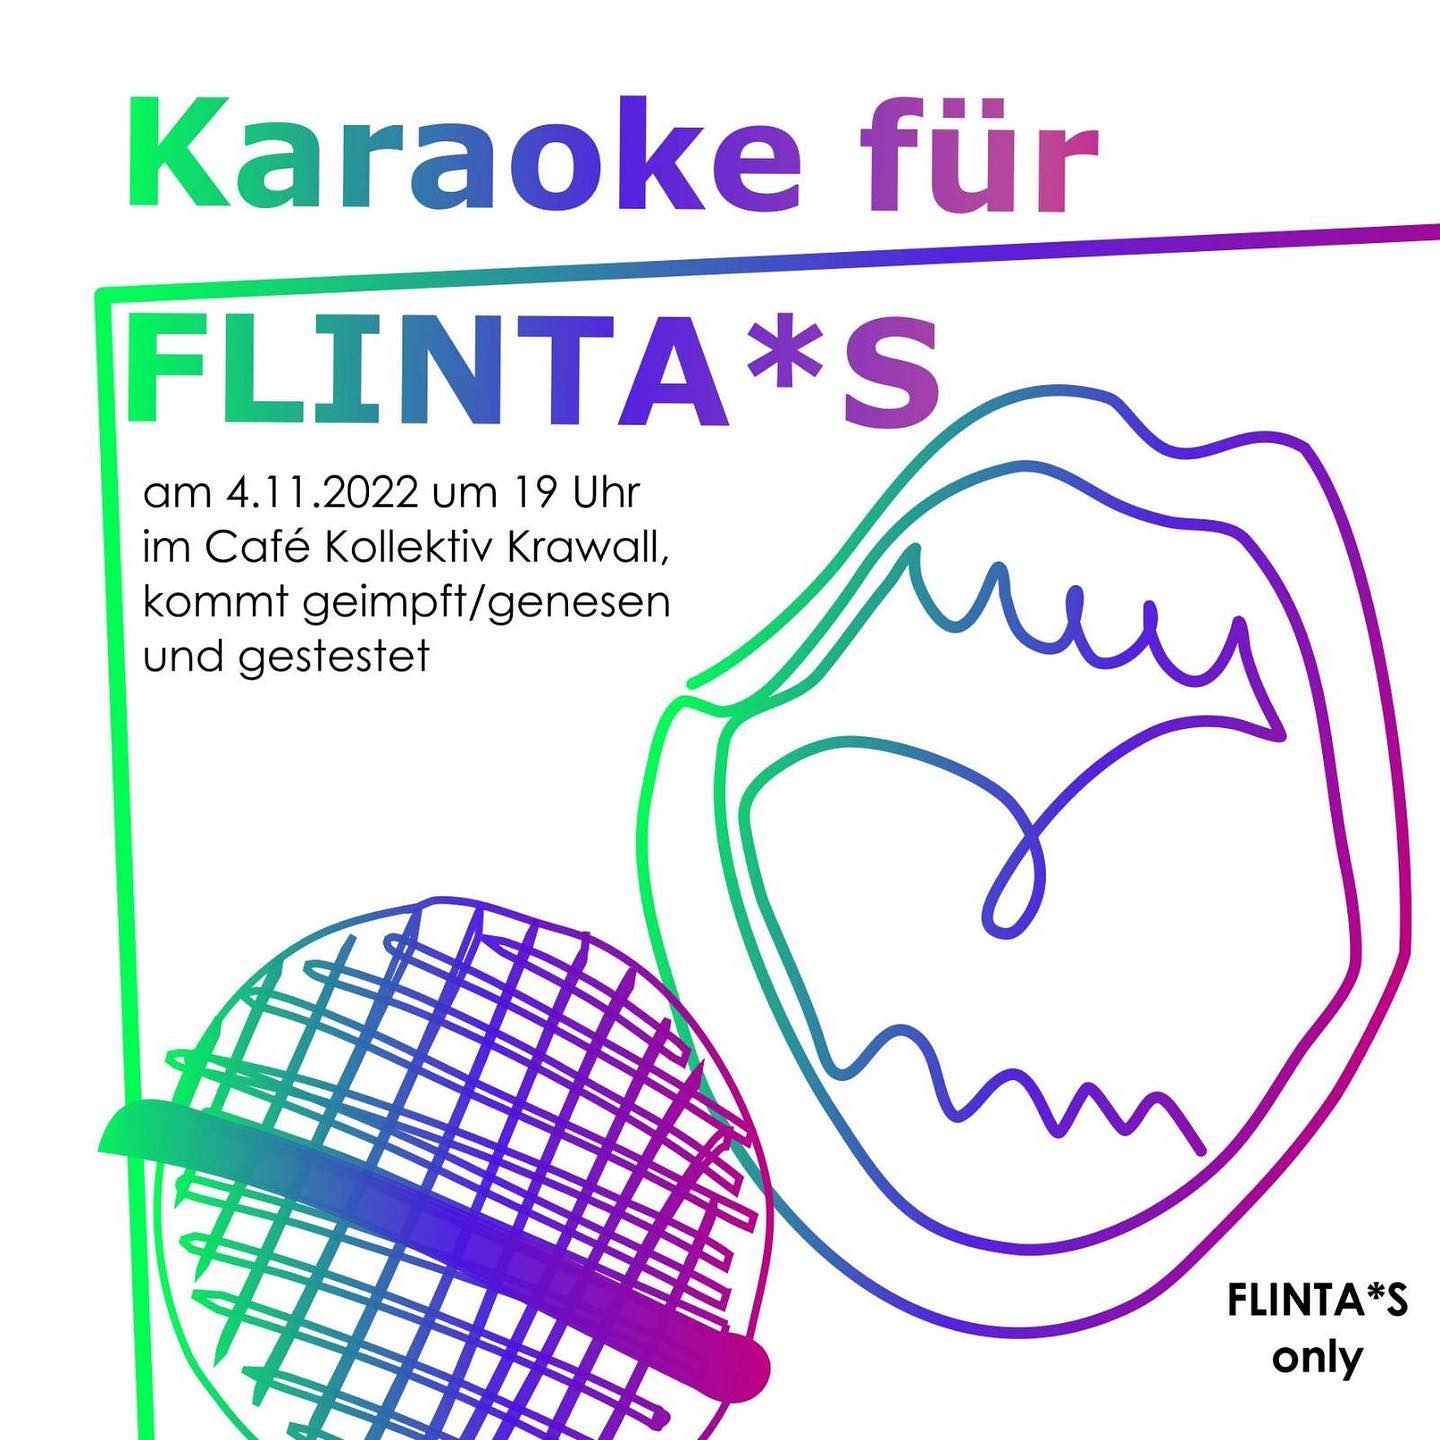 Karaoke für FLINTA*